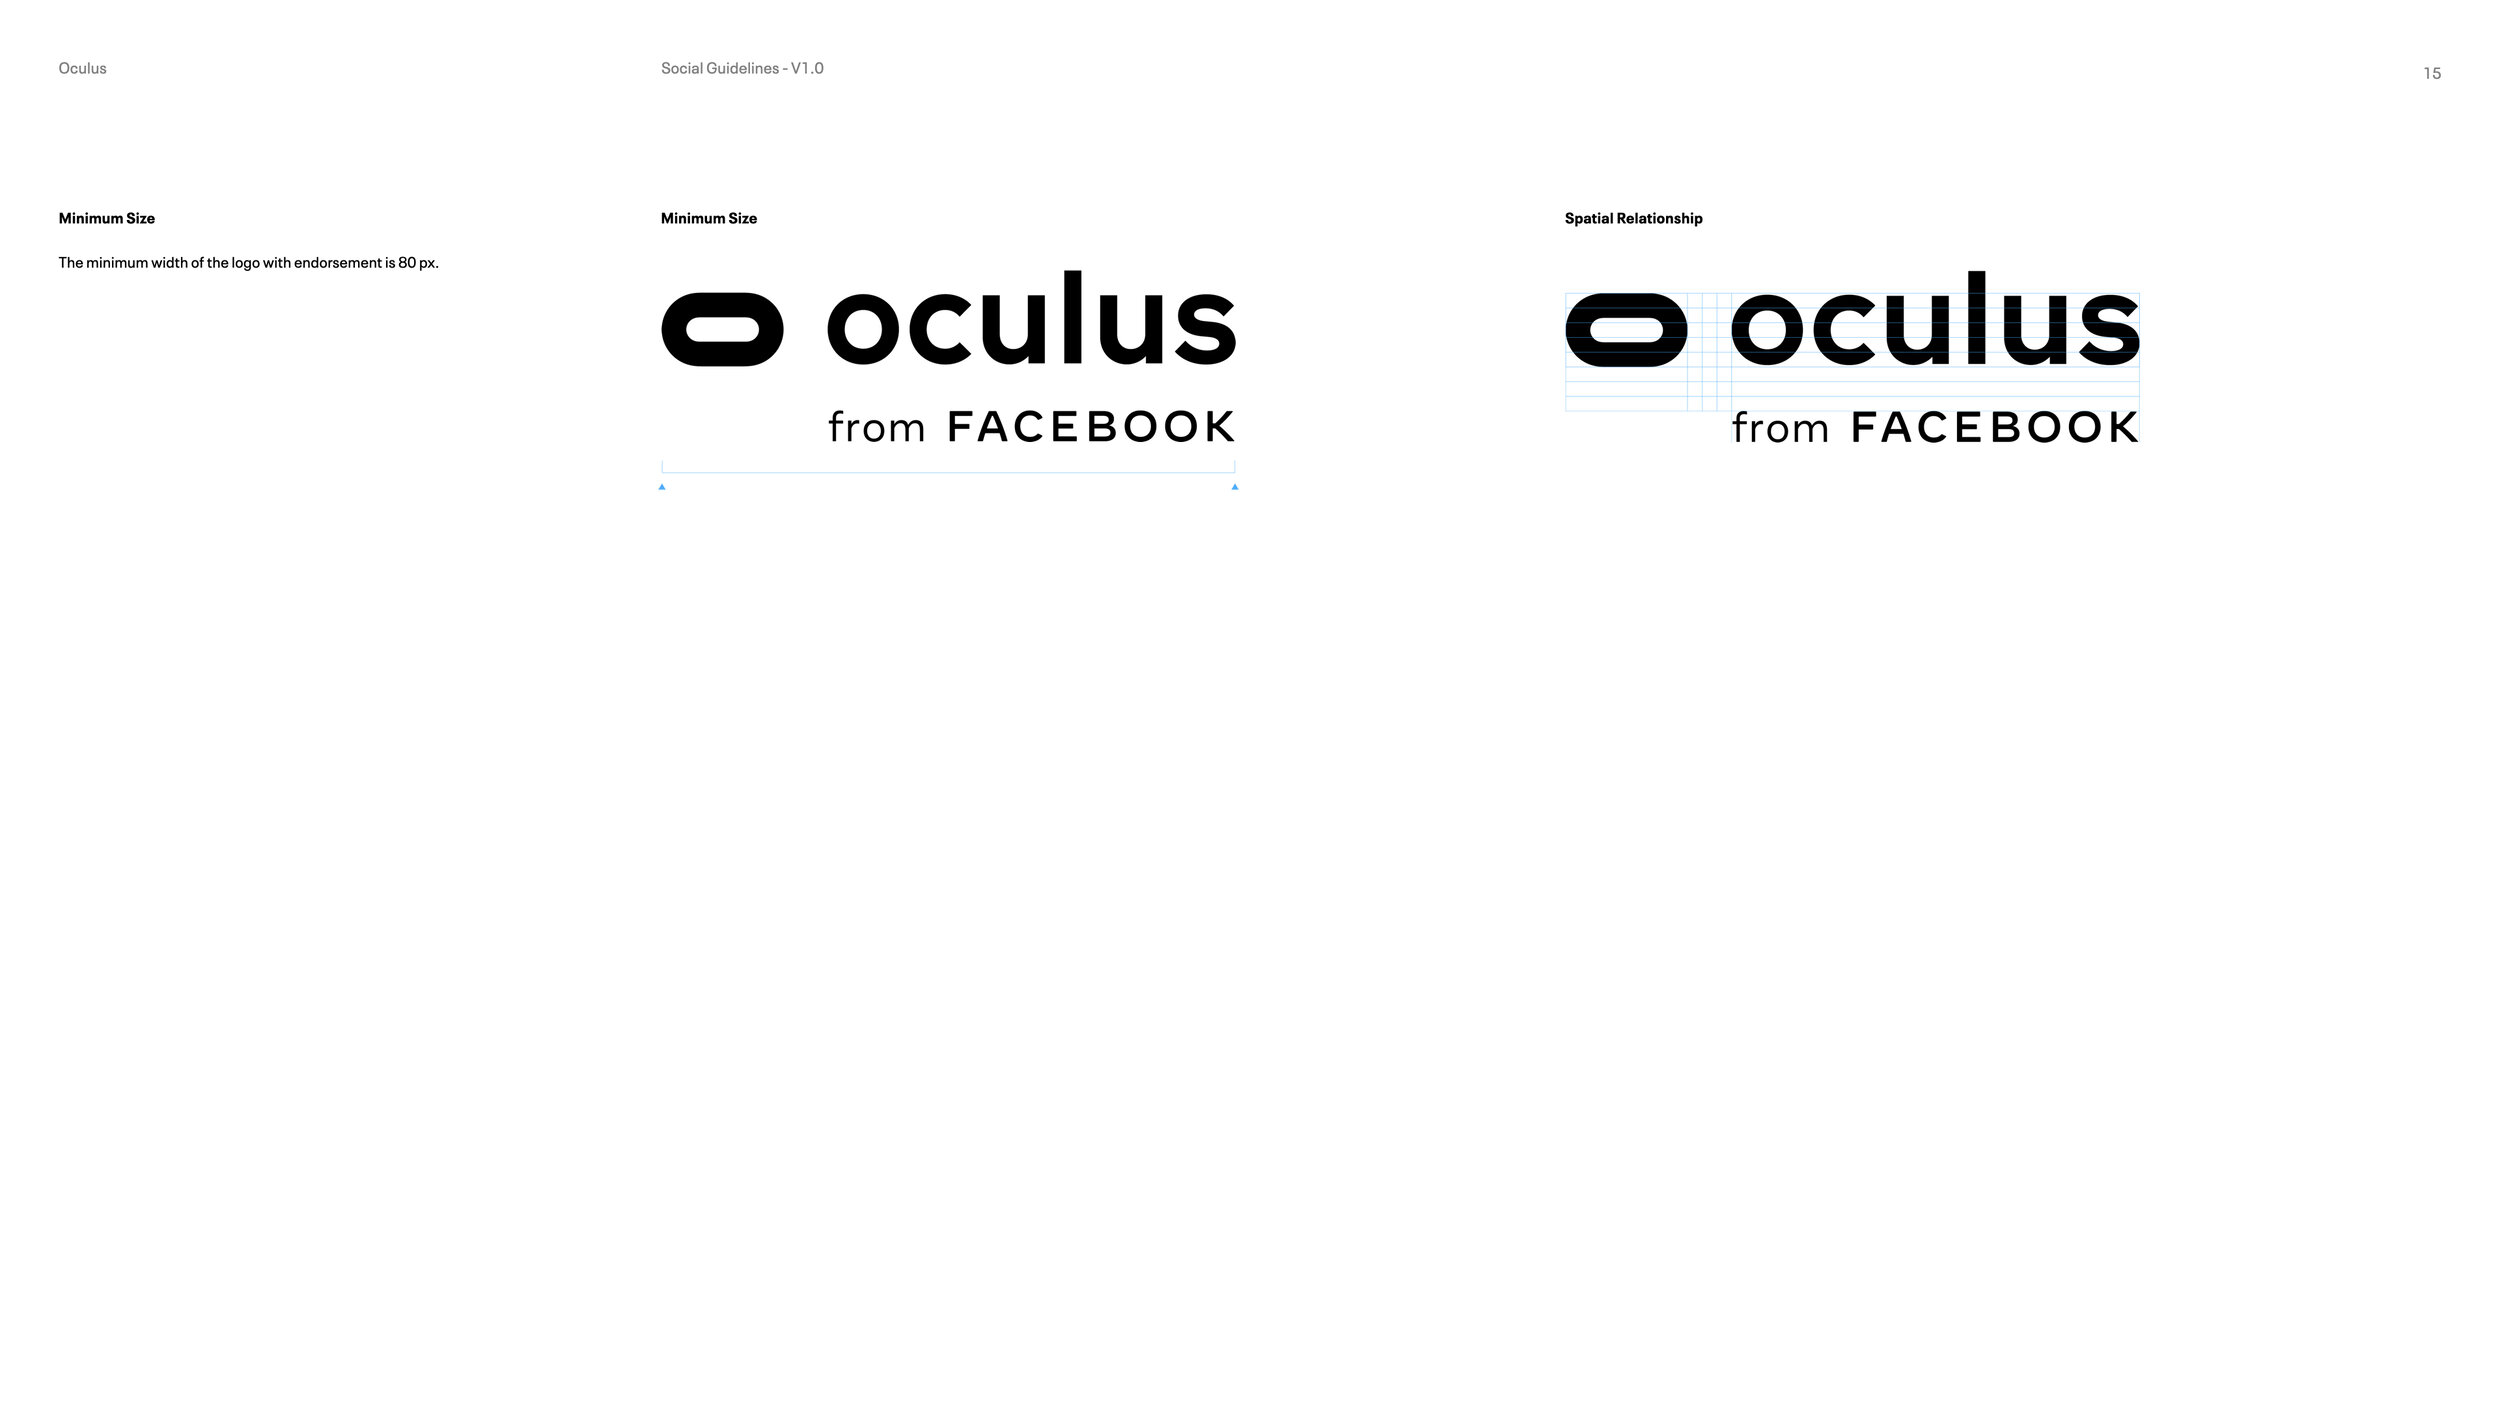 2020_10_13_Oculus_Social_Guidelines (1).015.jpeg